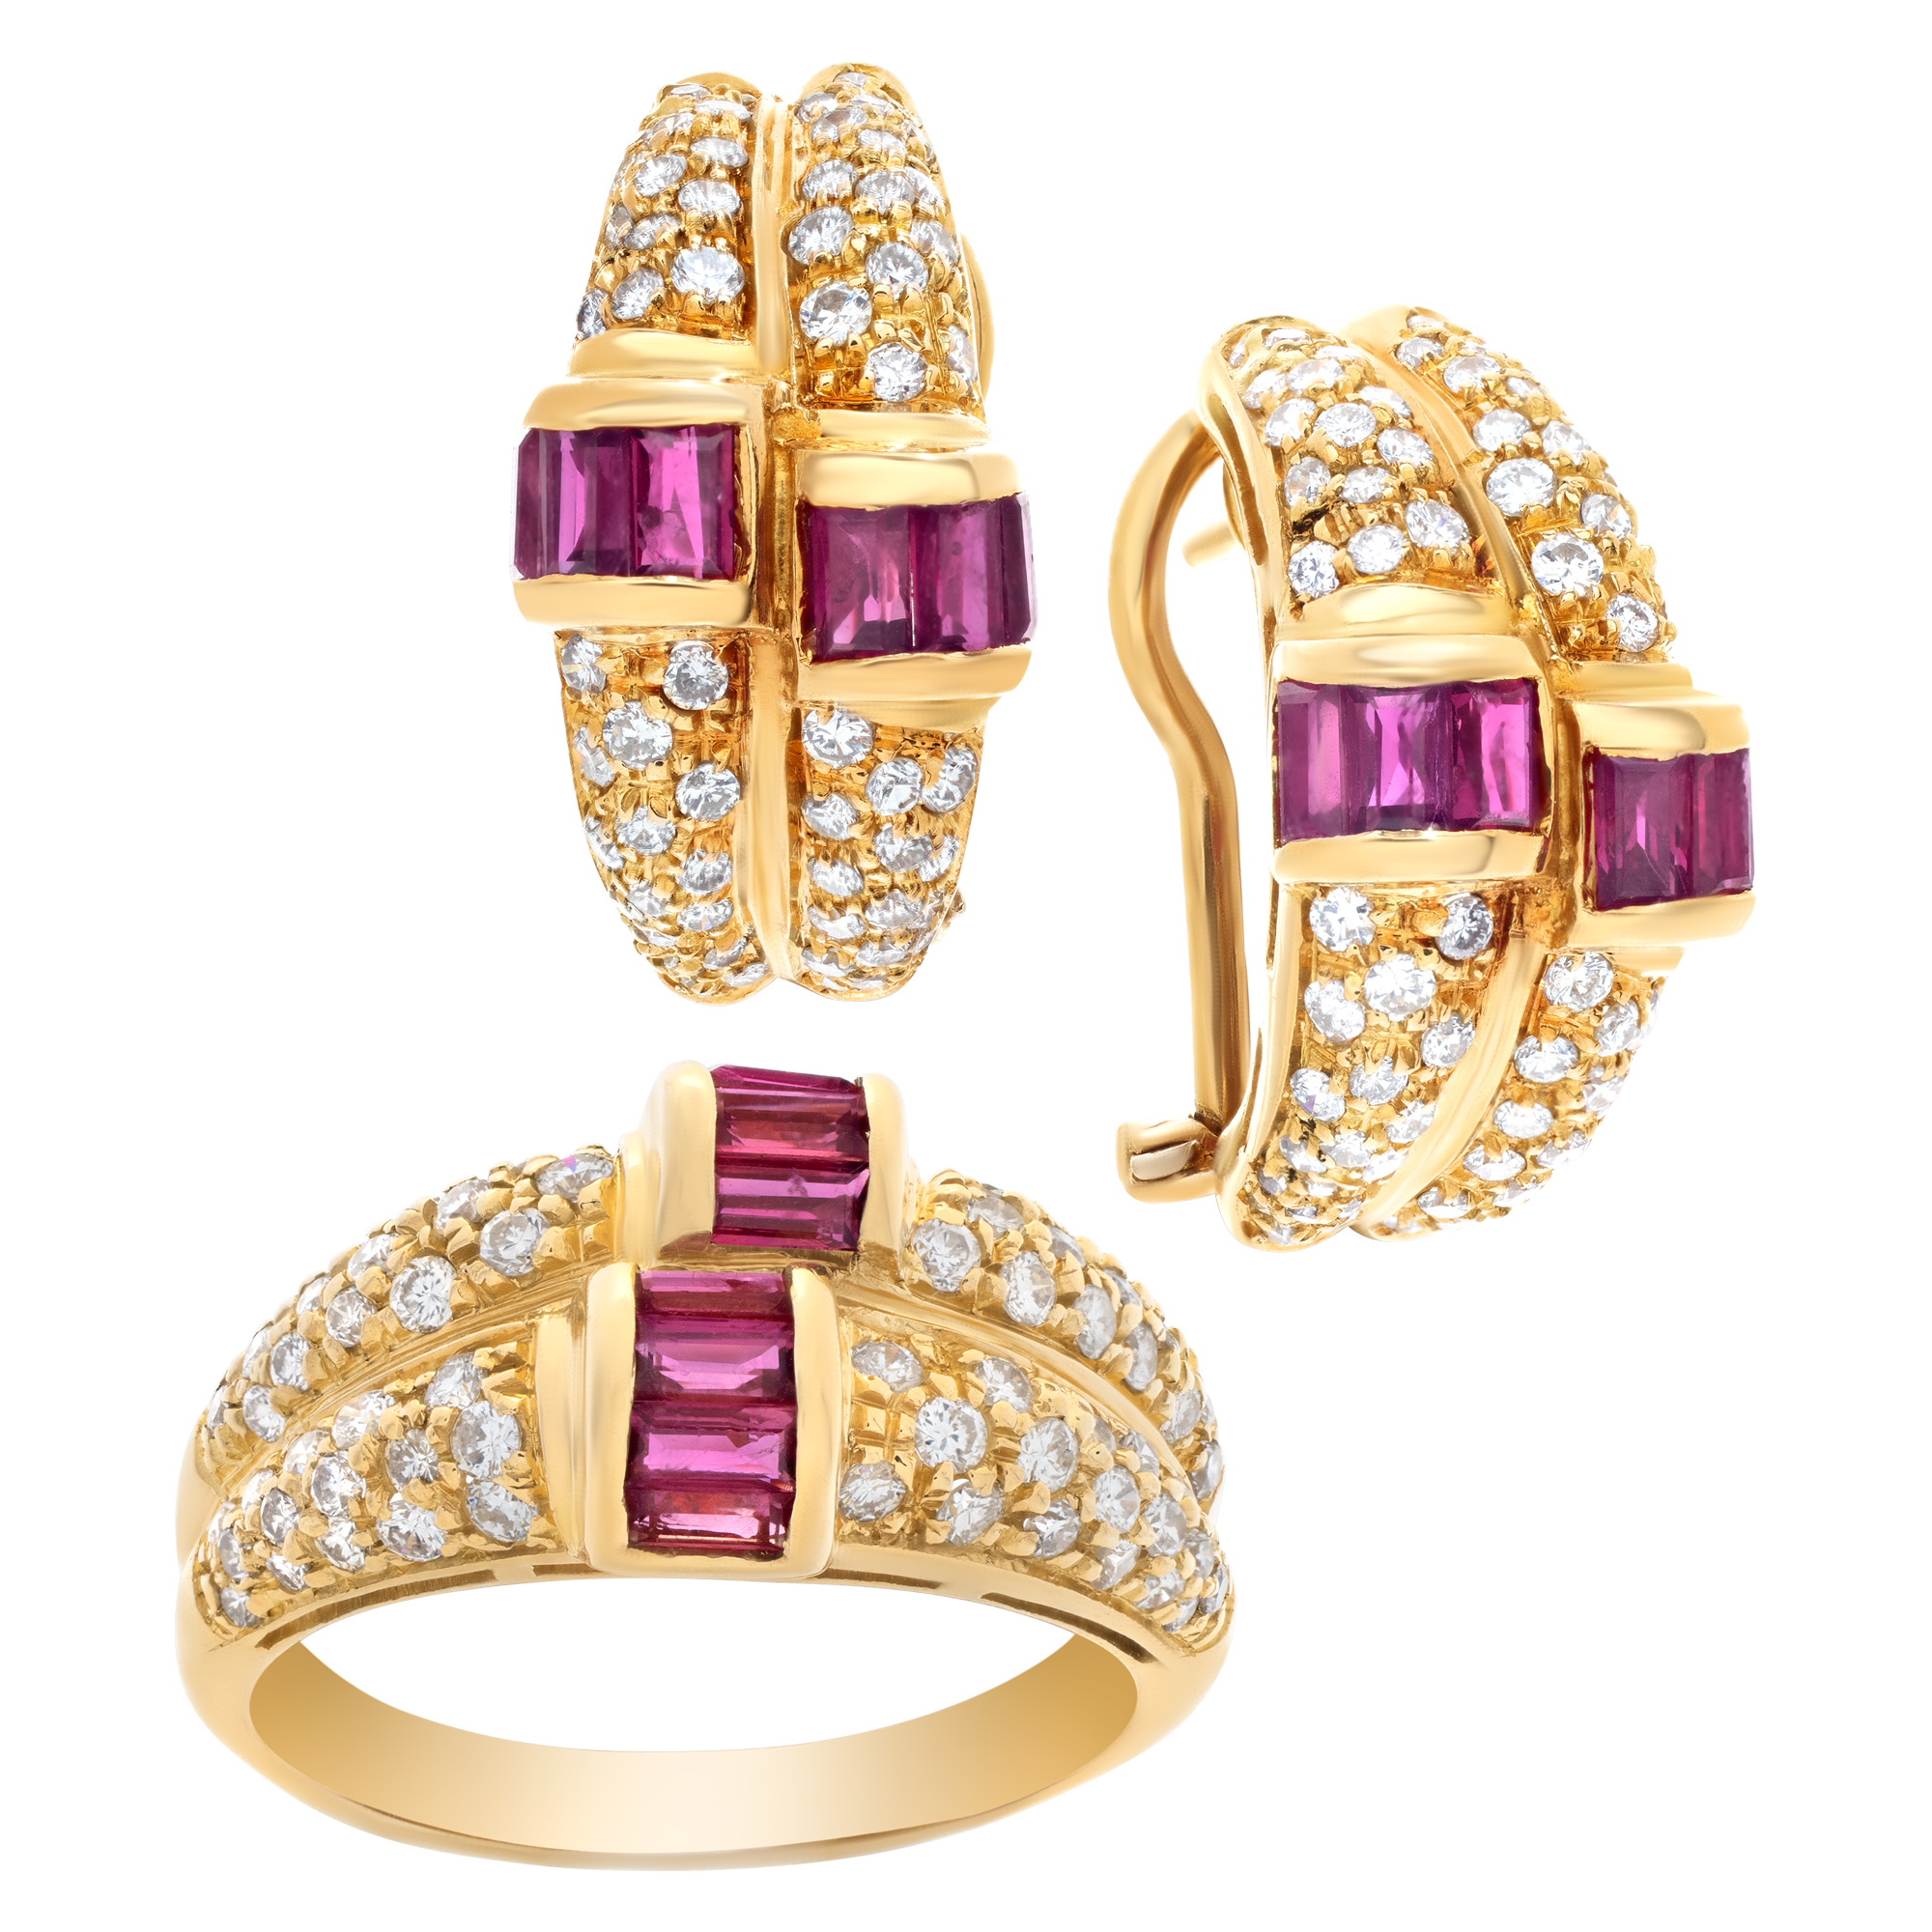 Ruby & diamond earrings and ring set in 18k image 1